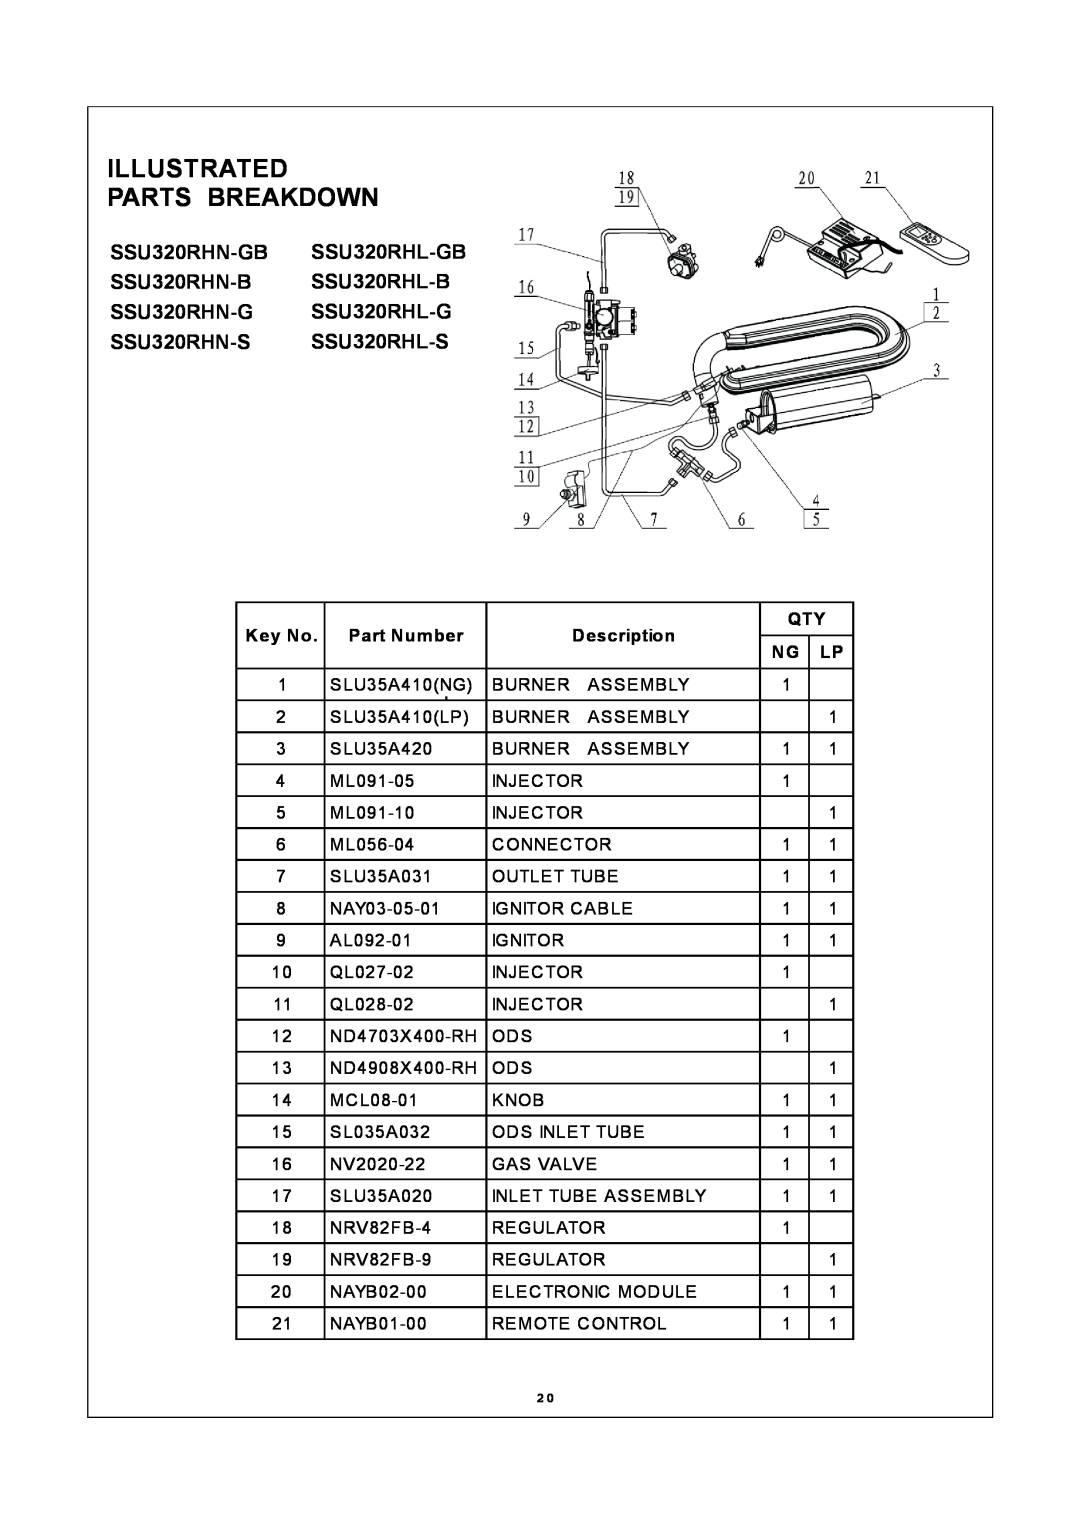 Procom SSU320RHL-S Illustrated Parts Breakdown, SSU320RHN-GB SSU320RHL-GB SSU320RHN-B SSU320RHL-B, Part Number 